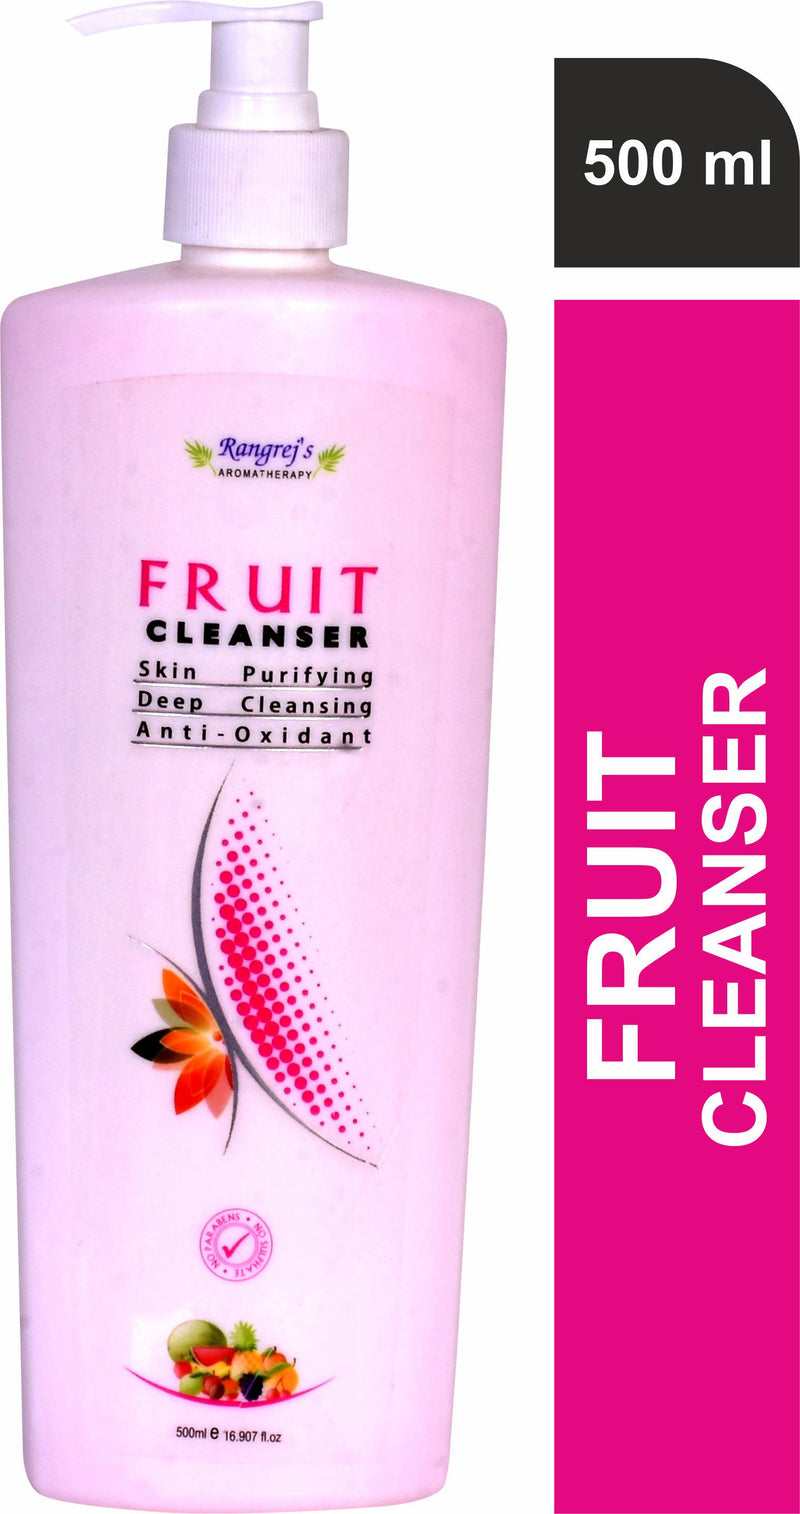 Rangrej's Aromatherapy Fruit cleanser